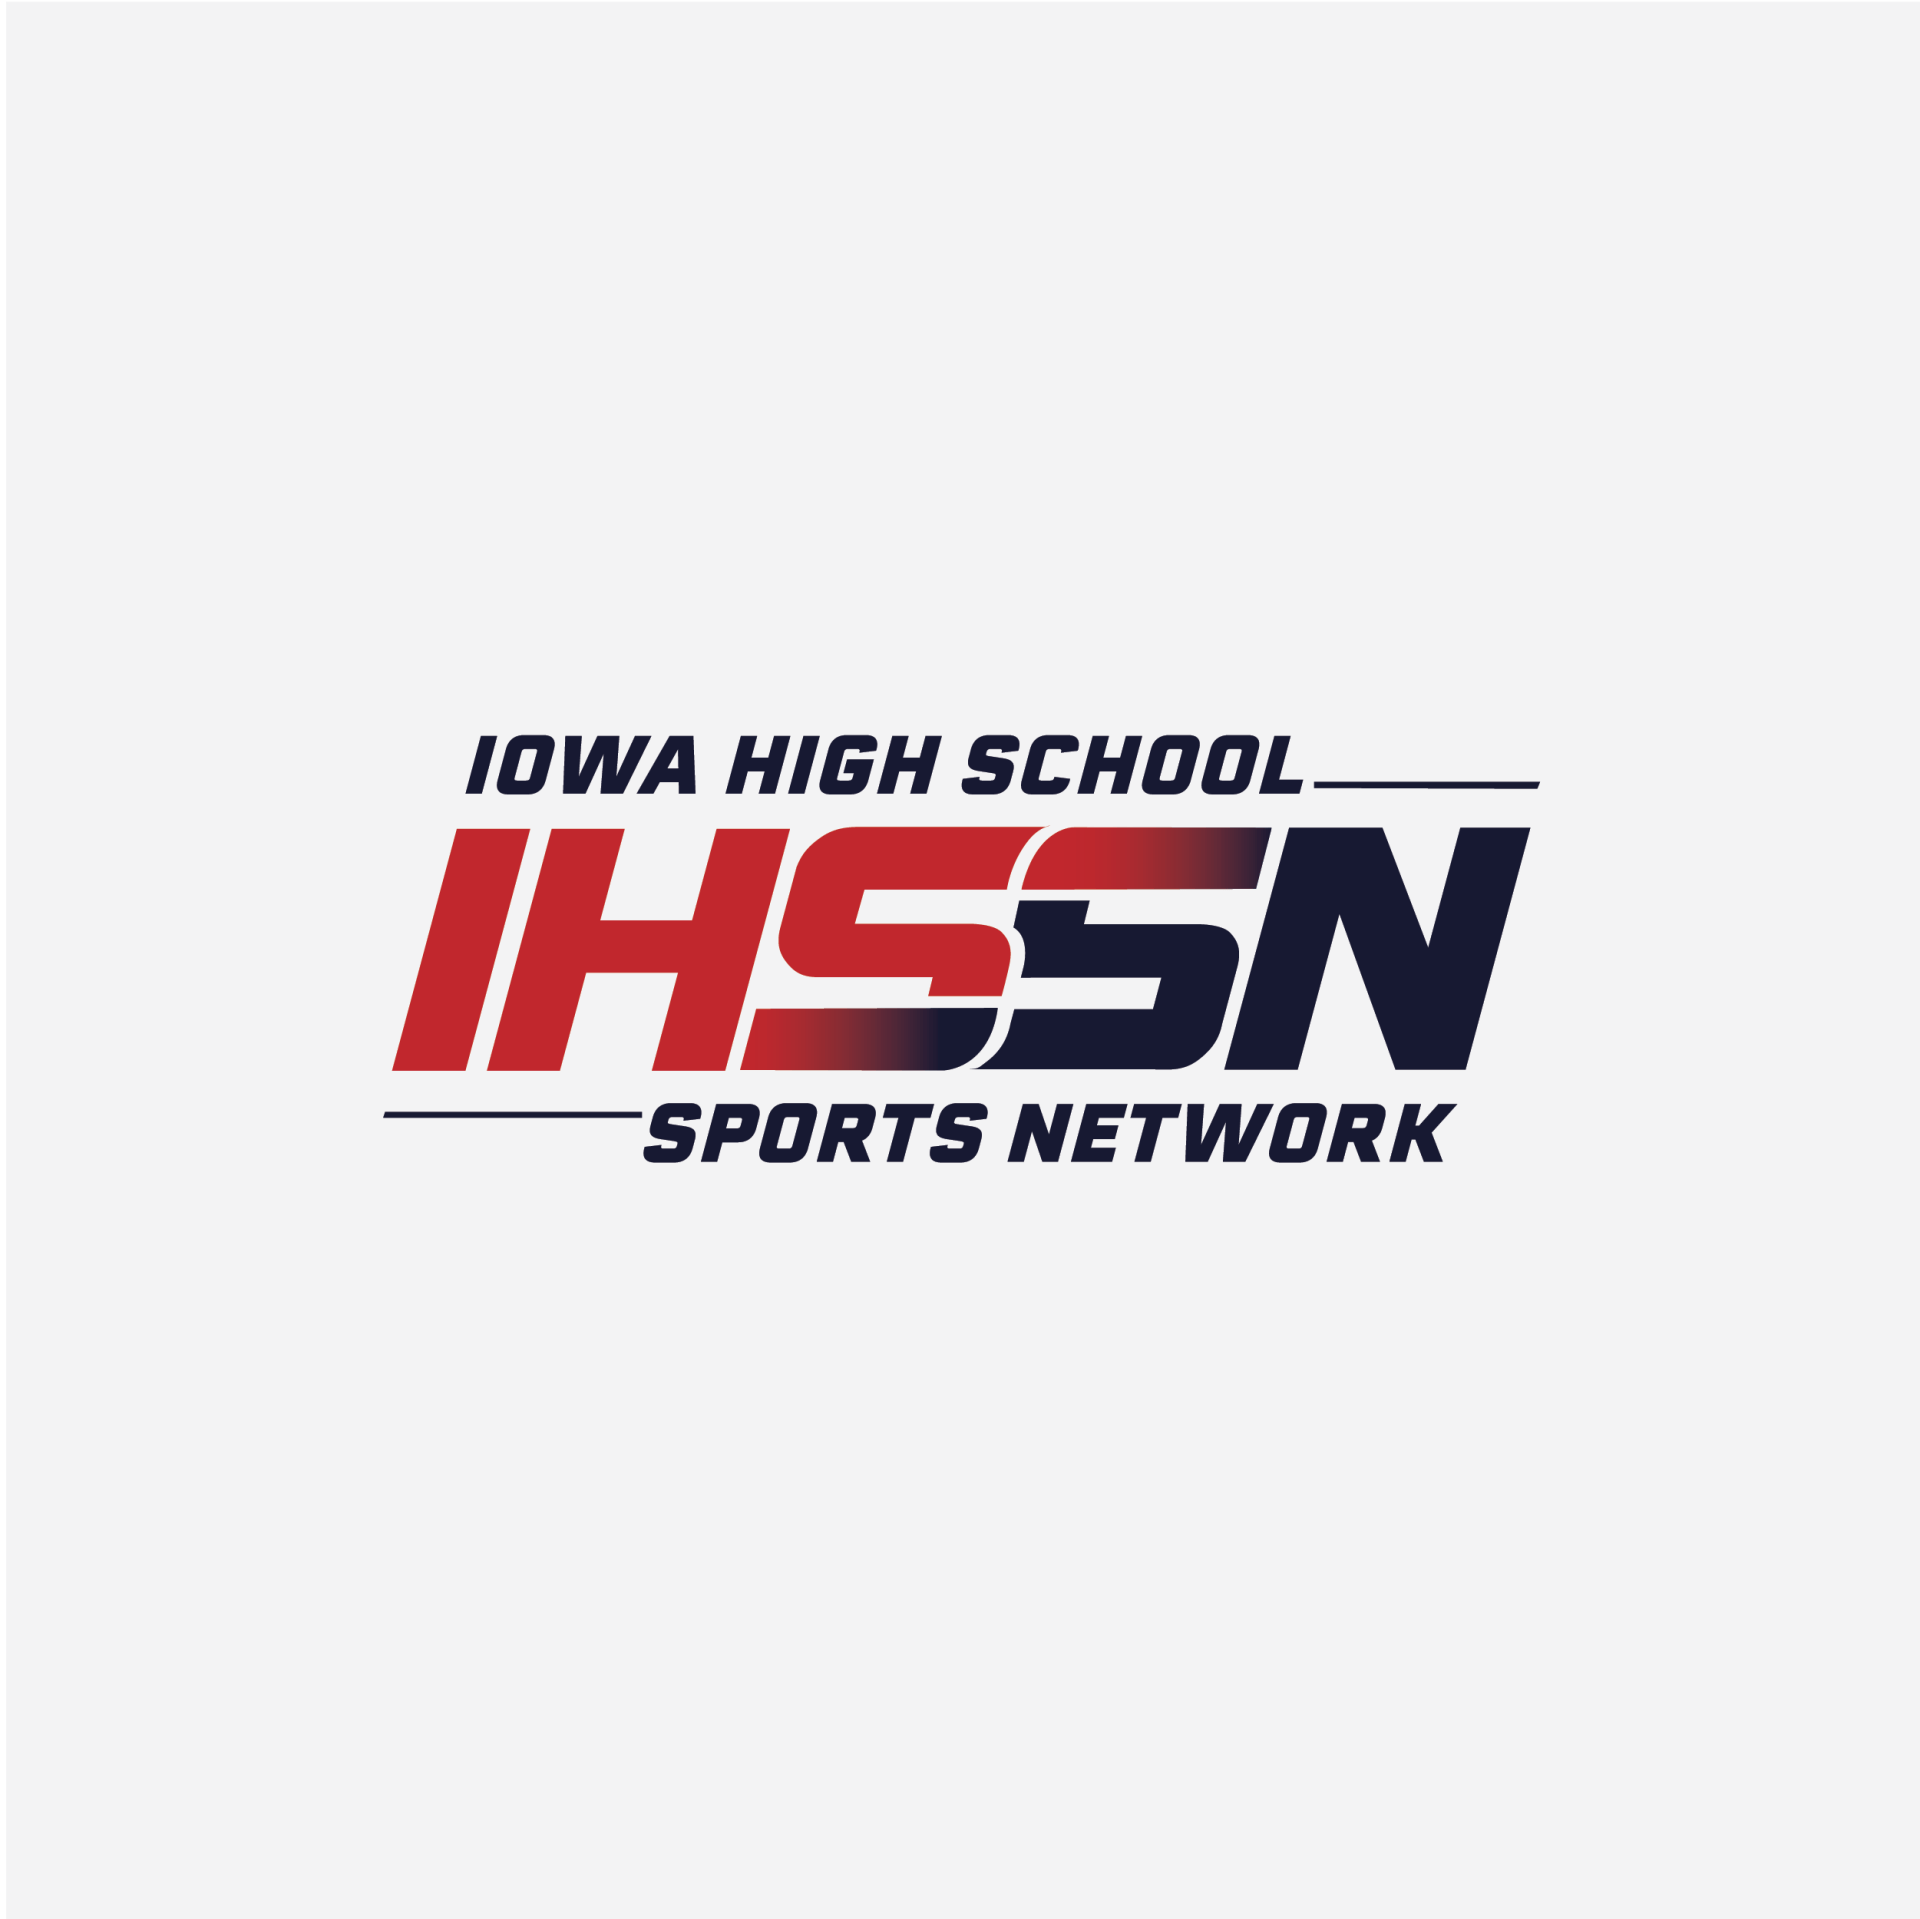 Iowa high school ihssn sports network logo on a white background.